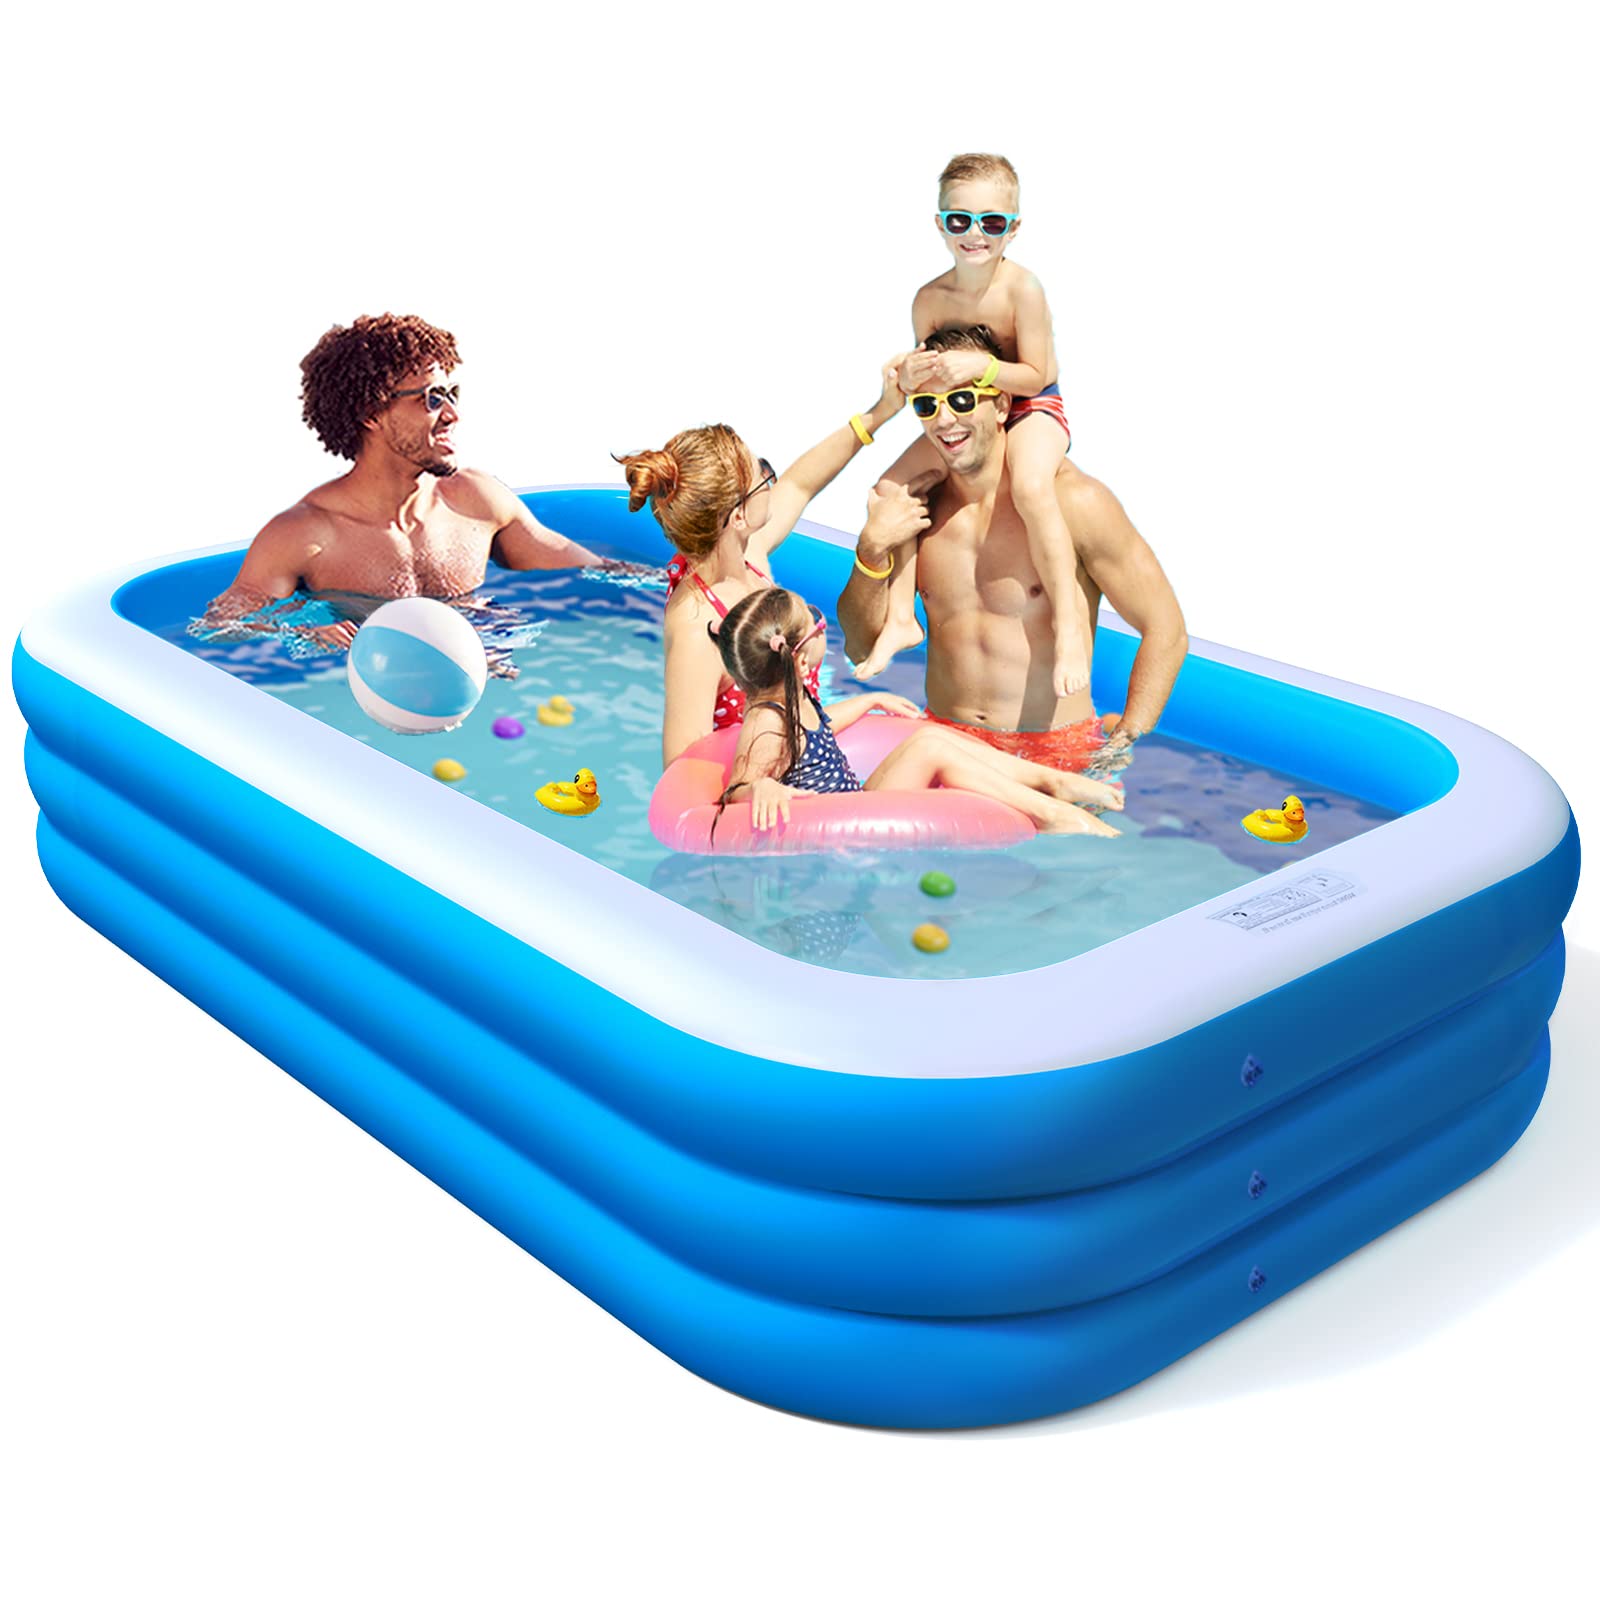 ALLADINBOX Inflatable Family Swimming Pool 118X72X22 Full-Sized Lounge Pool Large Rectangle Swim Center for Backyard Summ